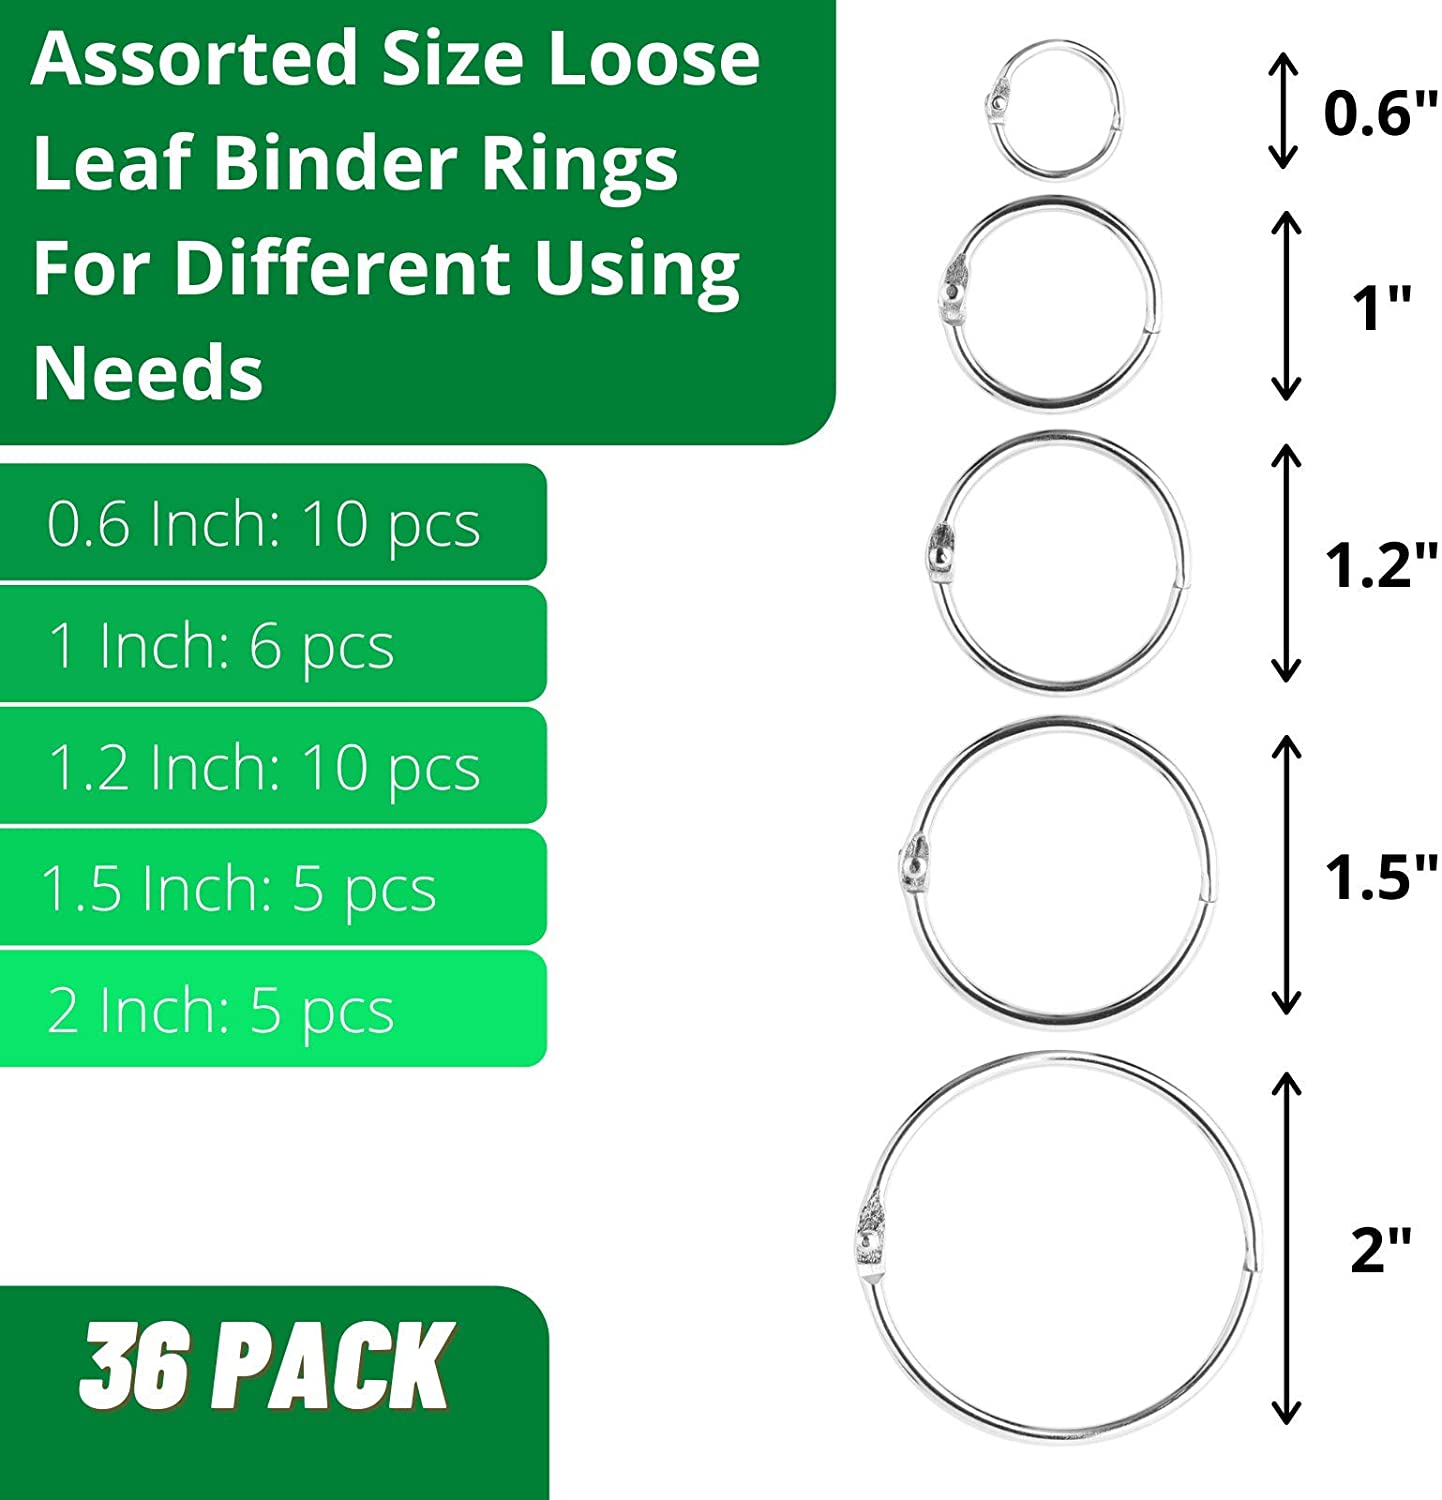 Mr. Pen- Binder Rings, Loose Leaf Binder Ring, 36pc, Assorted Sizes, Book Binder Rings, Ring Binder Clips, Metal Rings for Index Cards, Rings for